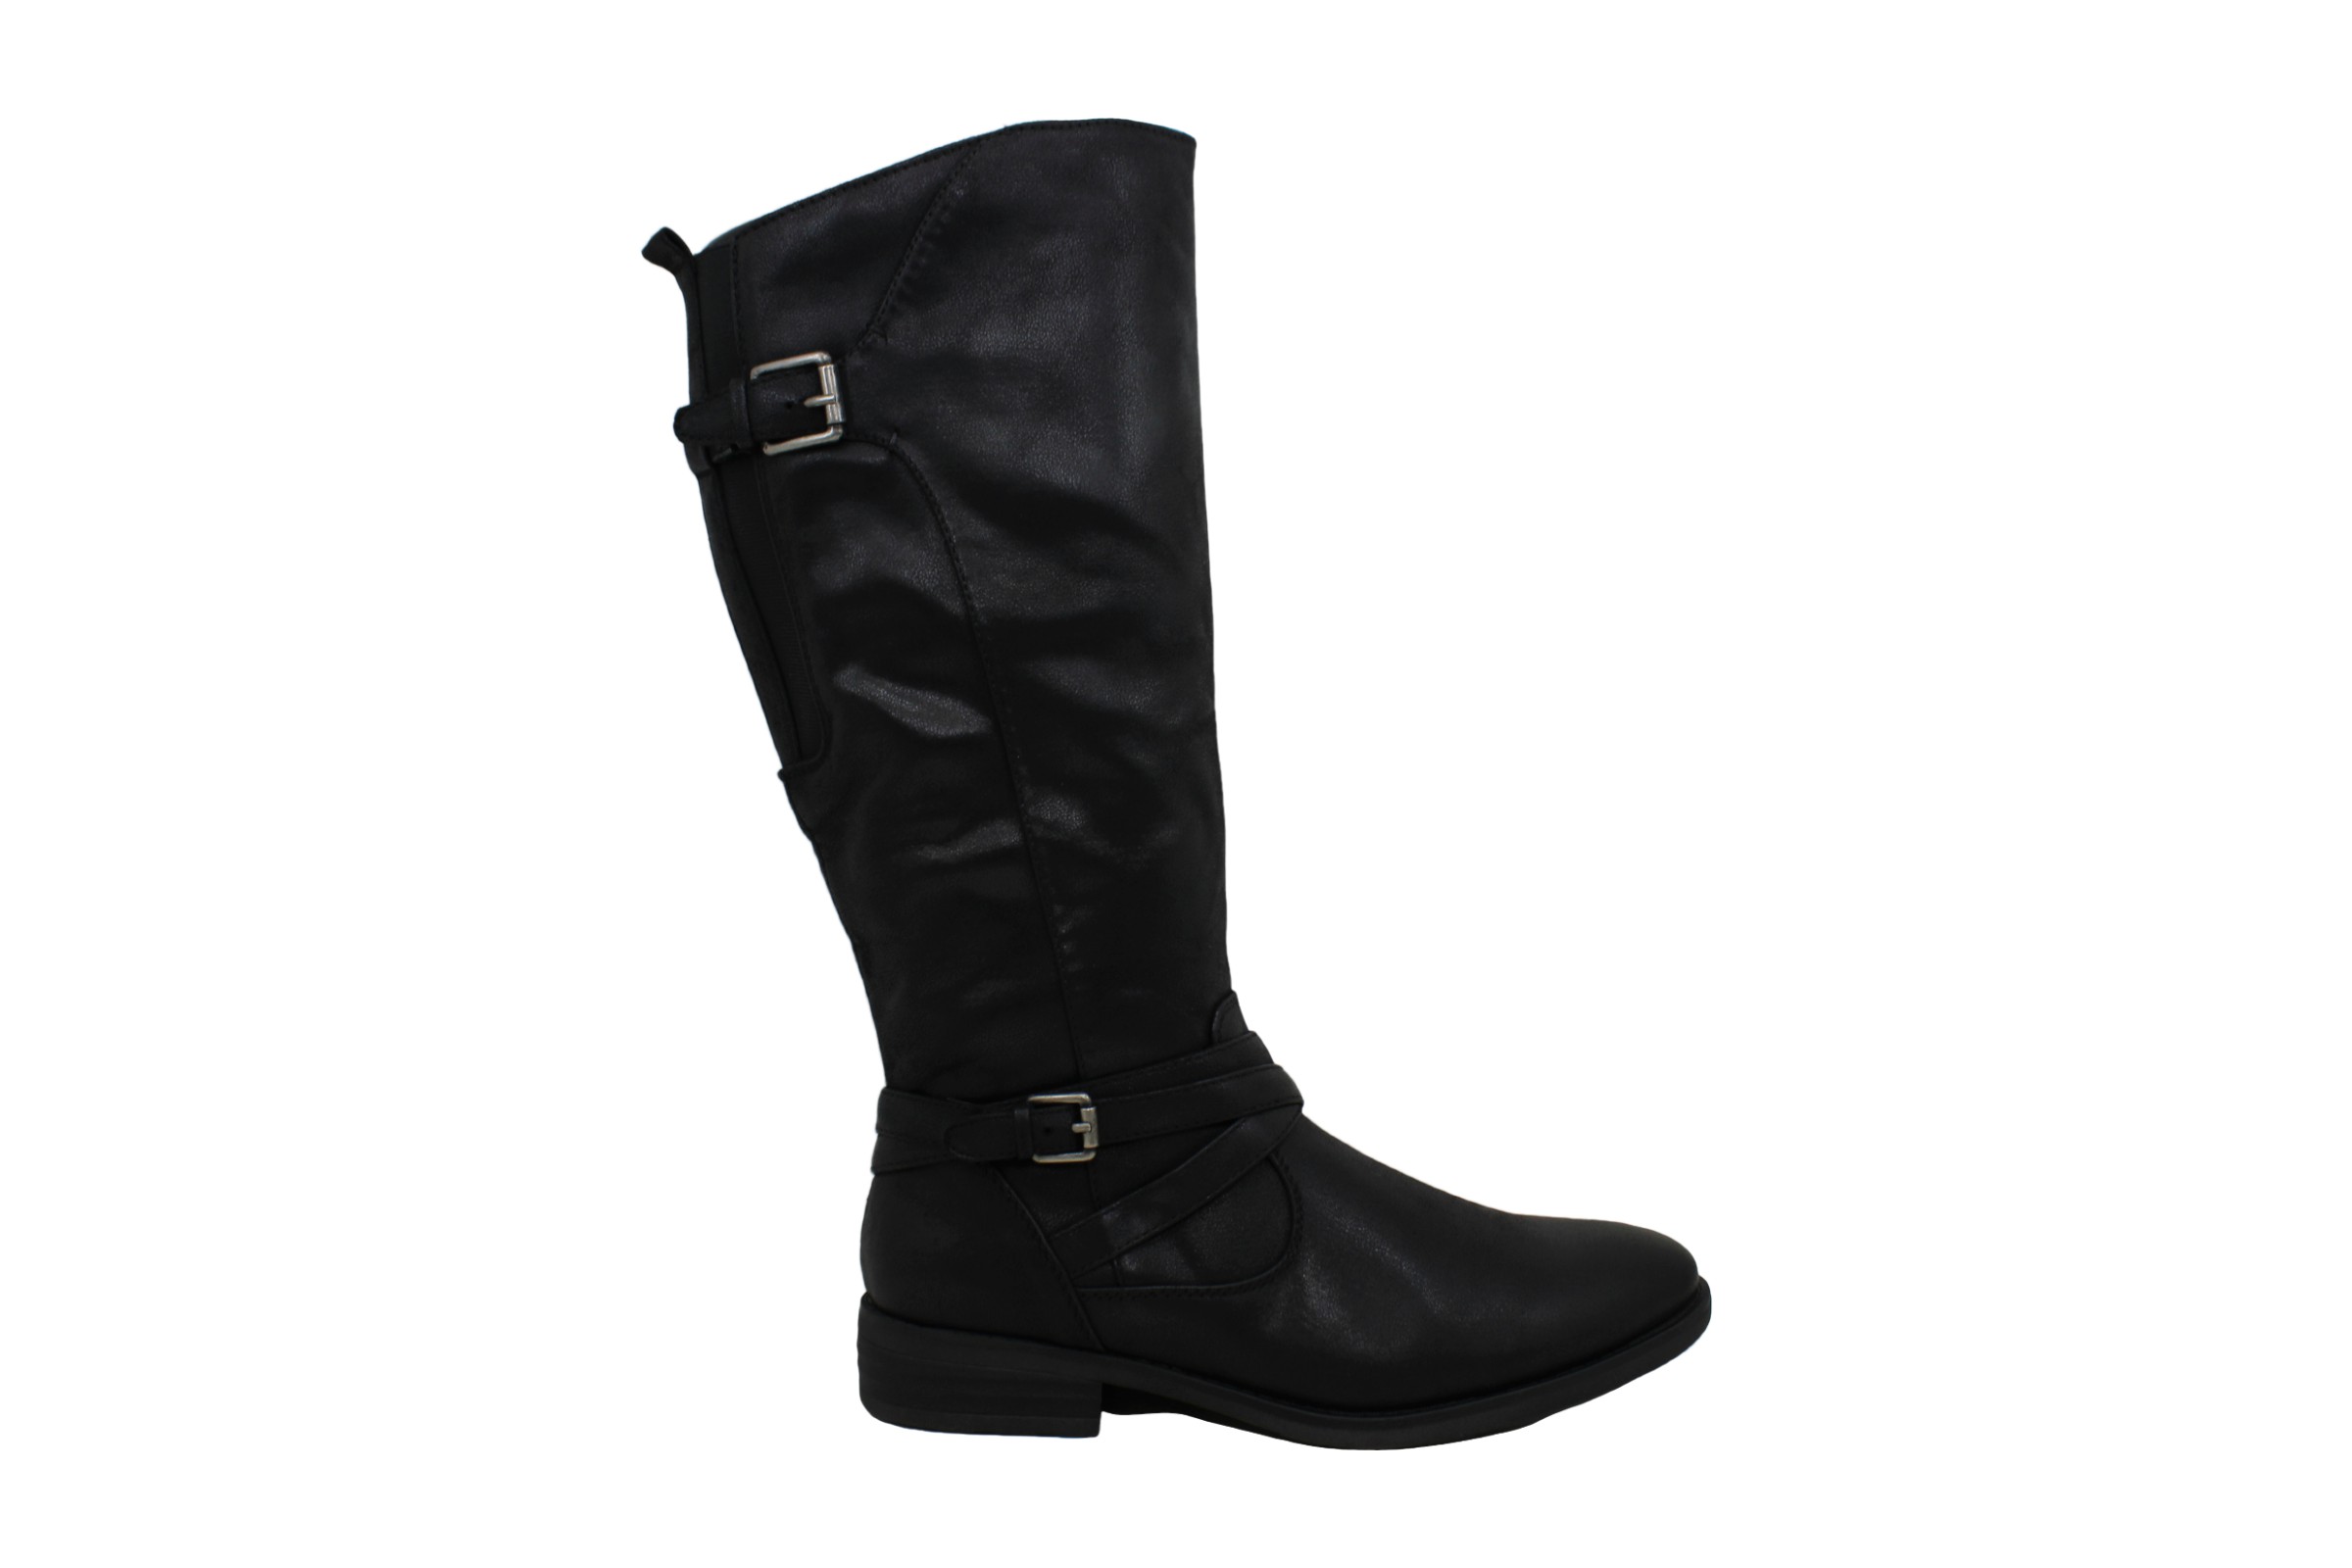 BARE TRAPS ALYSHA Leather High Fashion Boots - Black - Size 5.0 pRQa ...